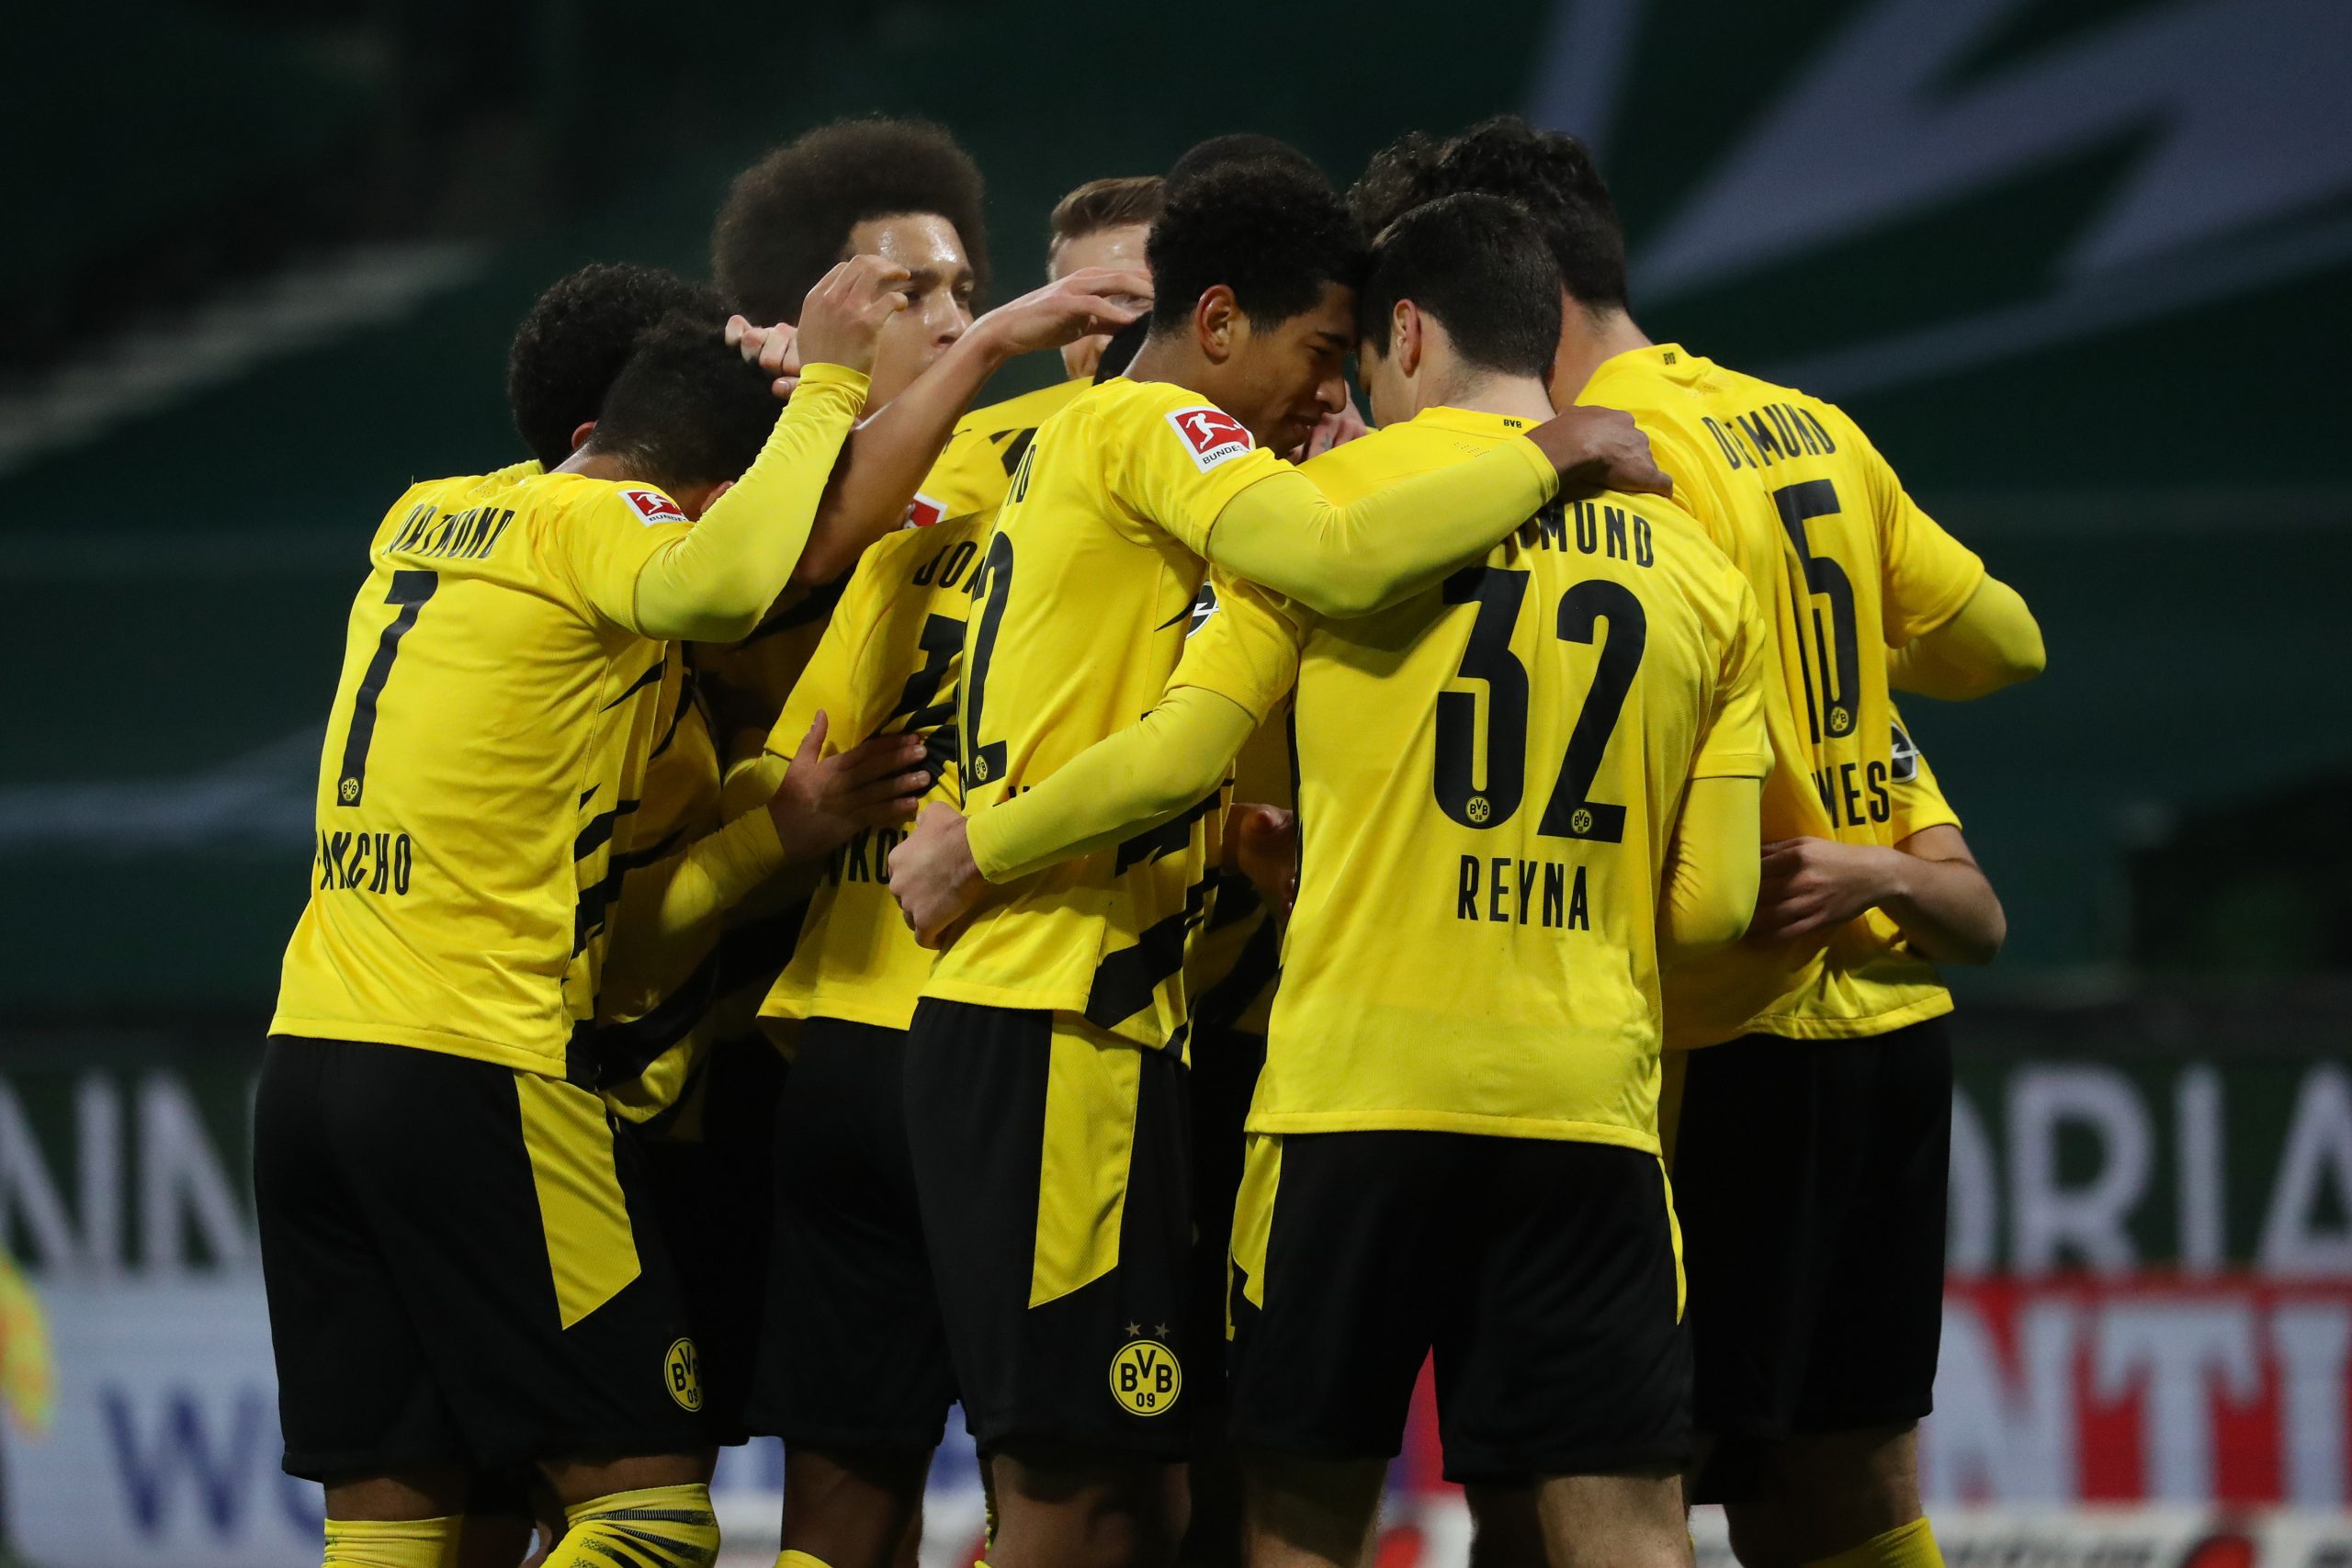 Werder Bremen vs Borussia Dortmund - A Terzic win